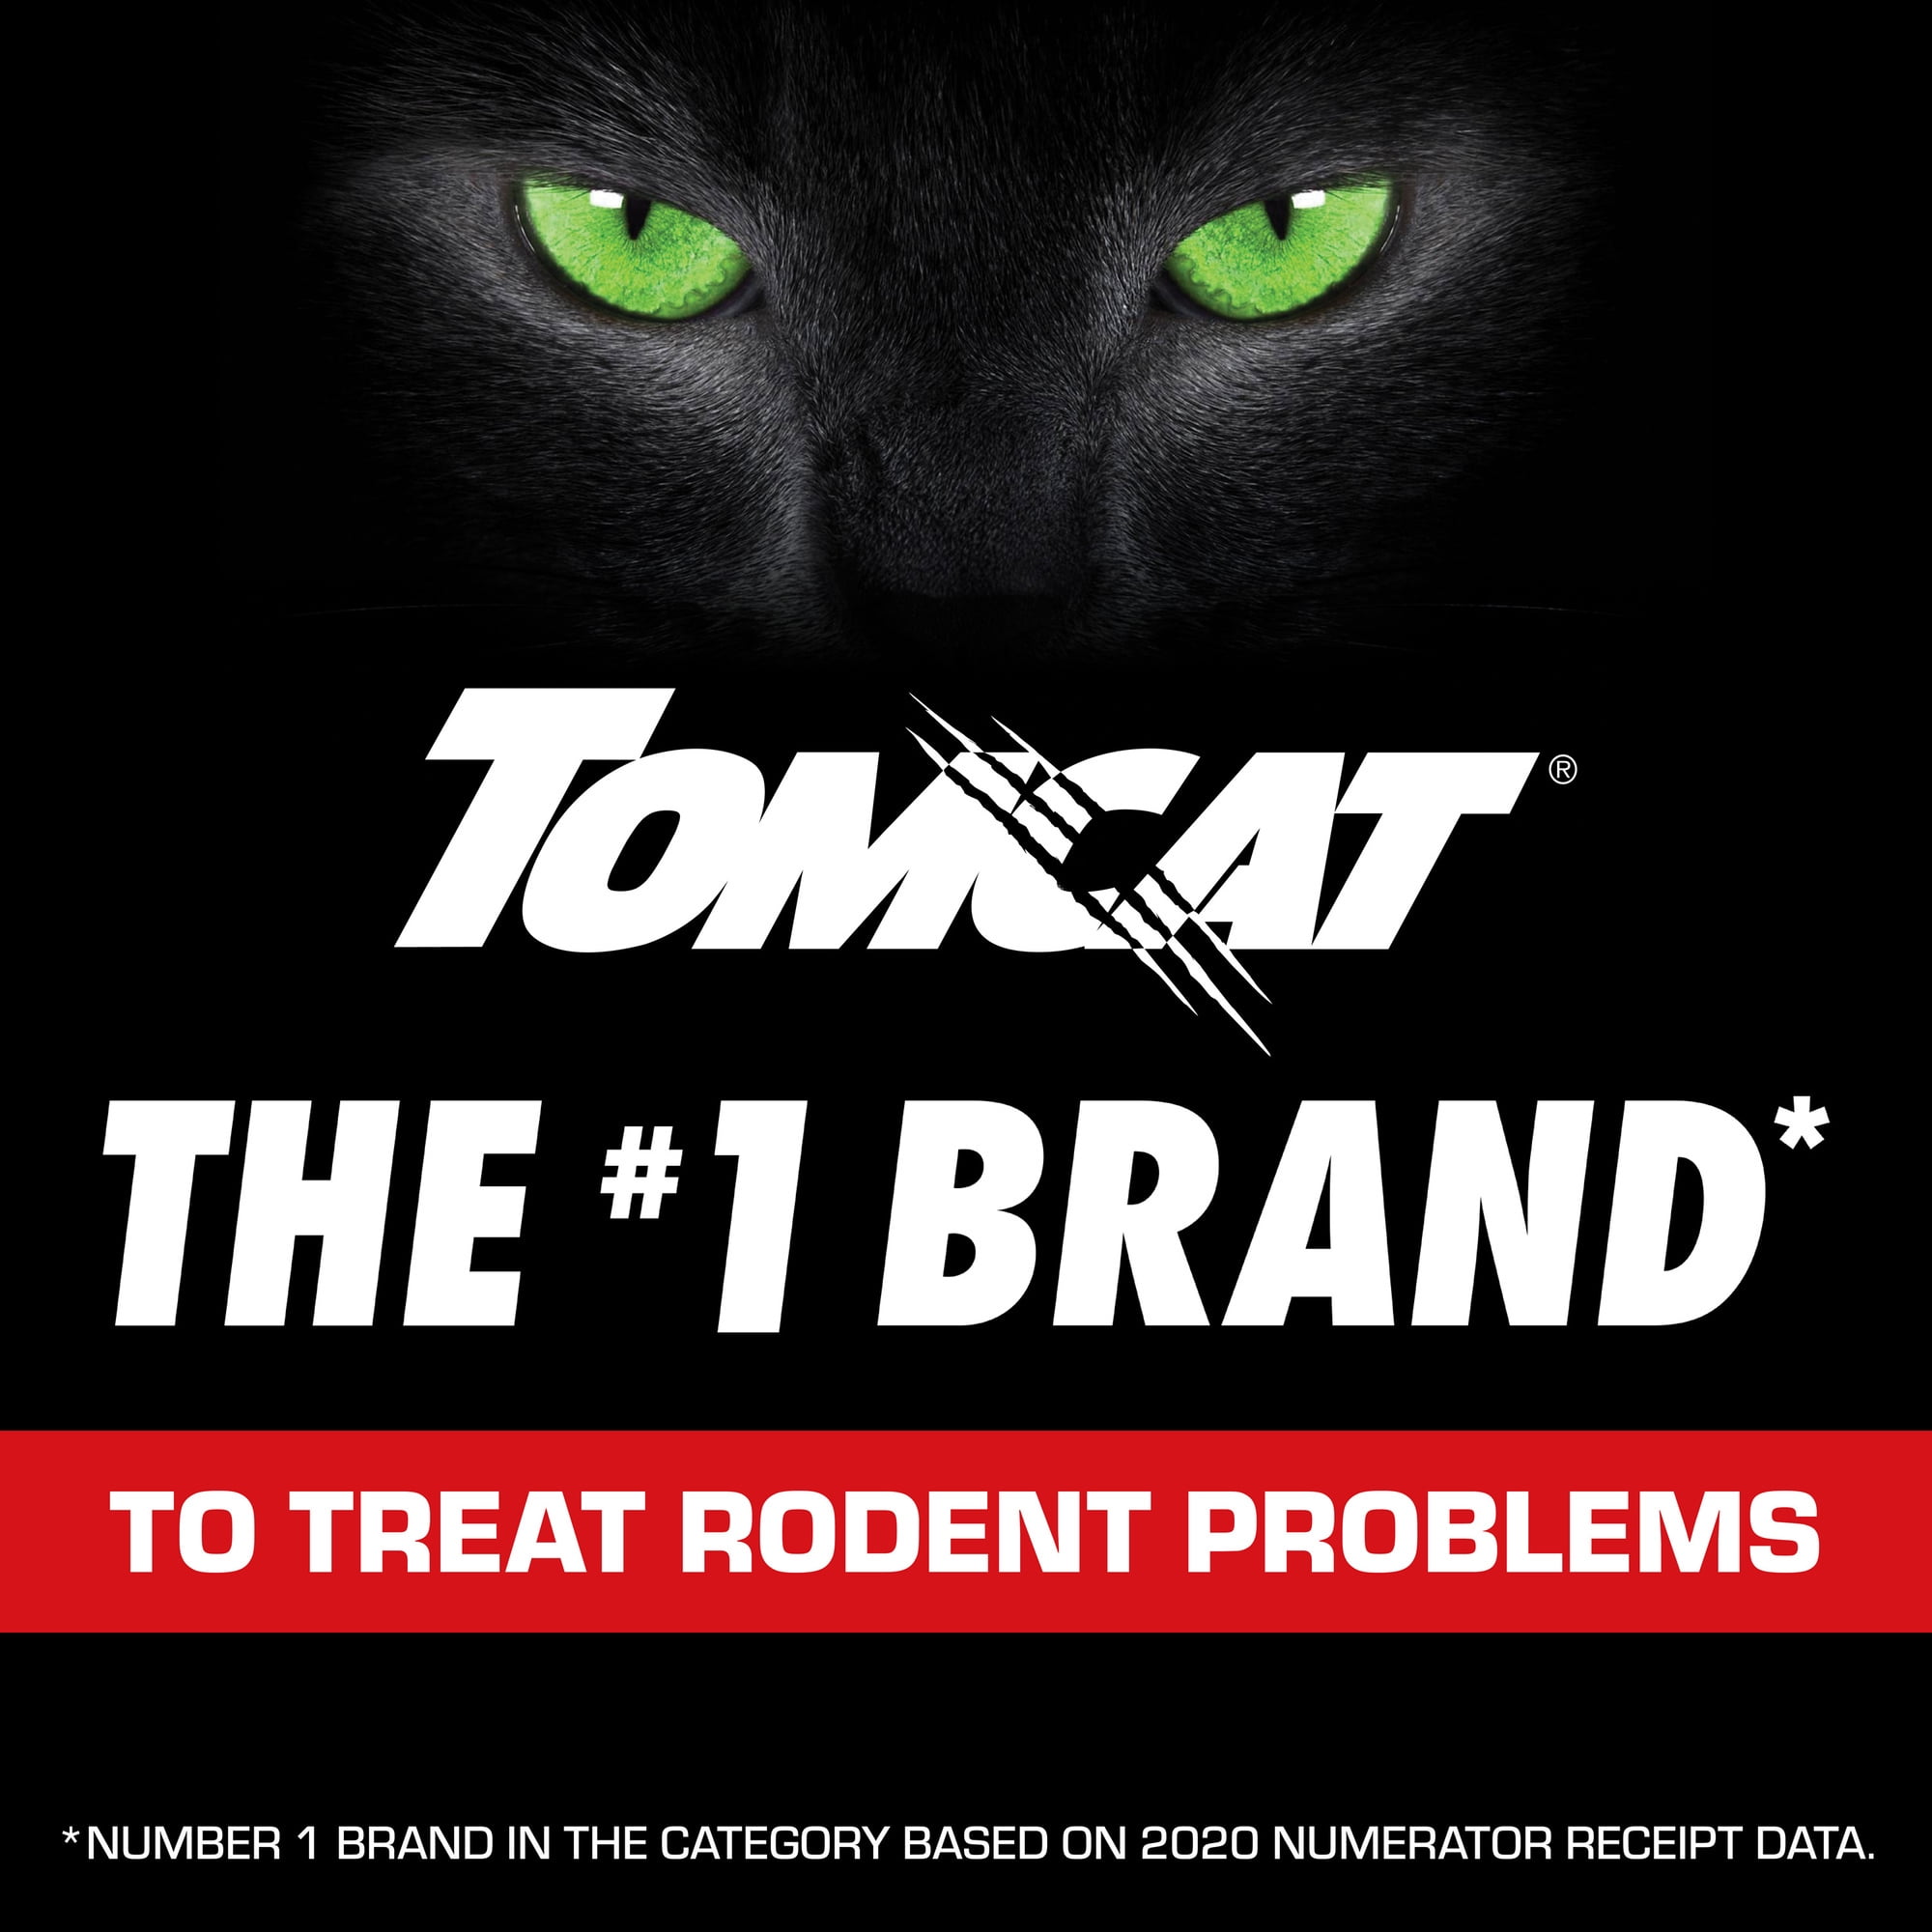 Tomcat Bait Station, Mouse Killer II, Disposable - 2 pack, 1 oz stations